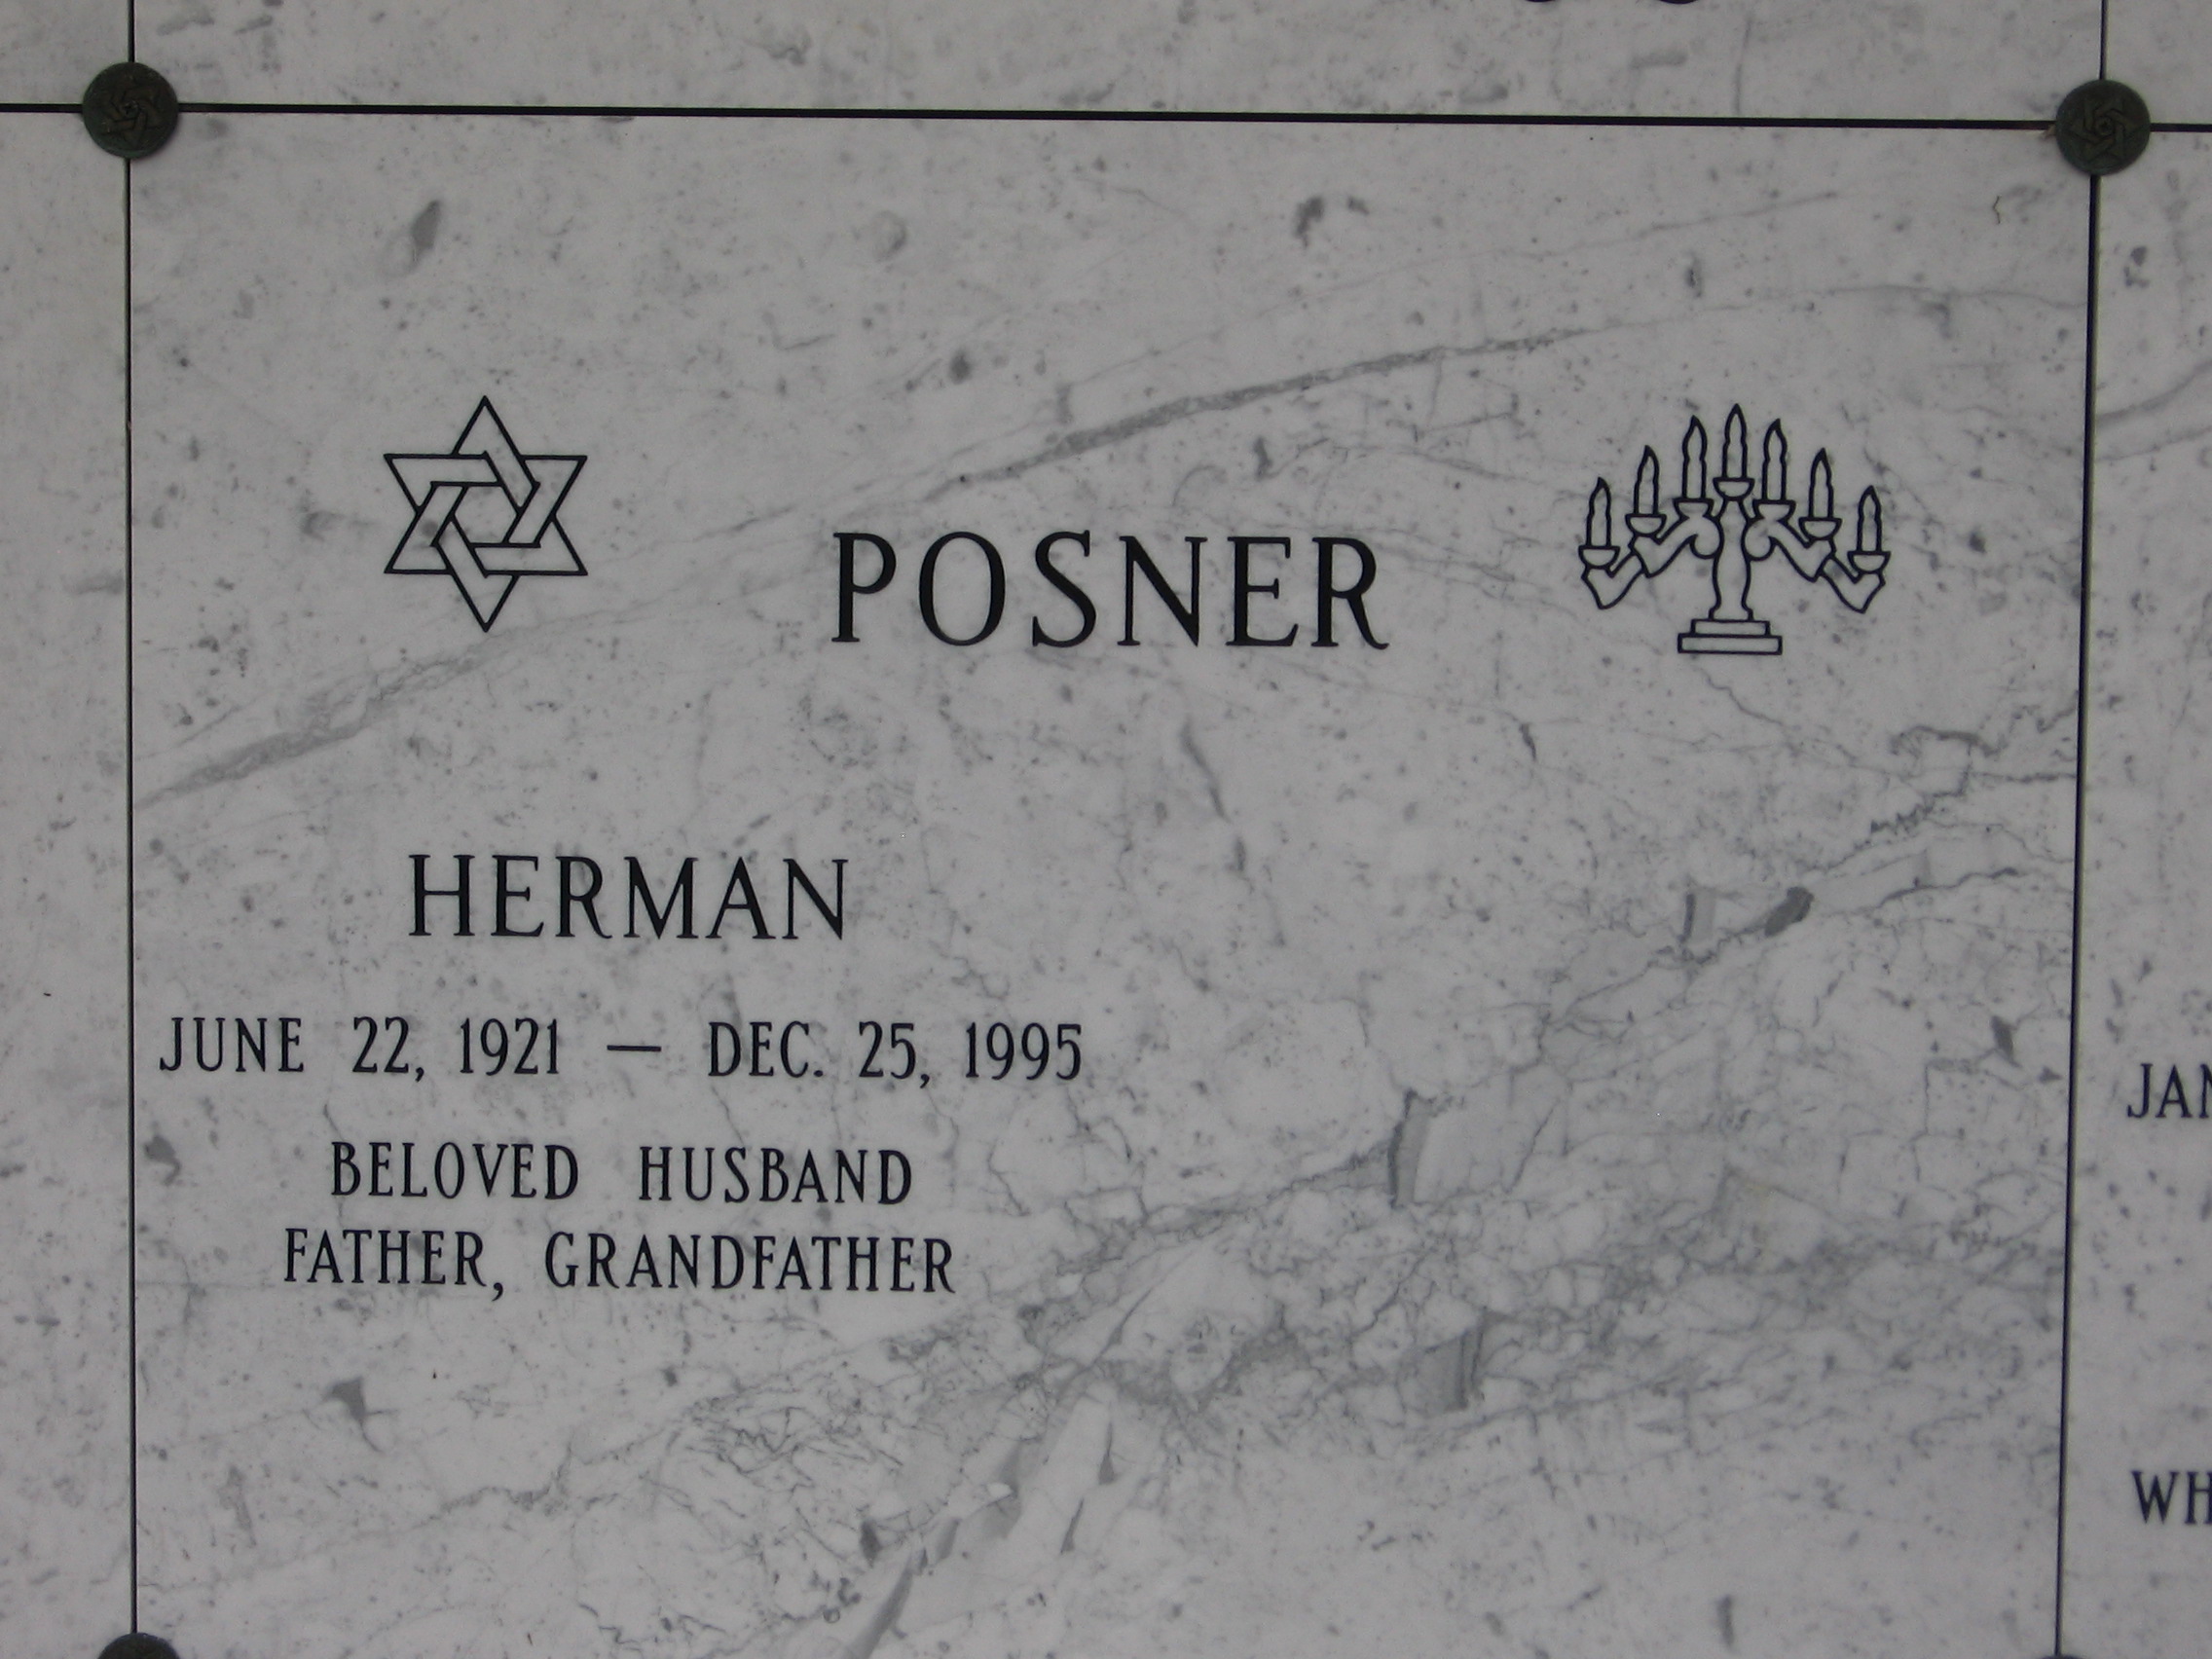 Herman Posner